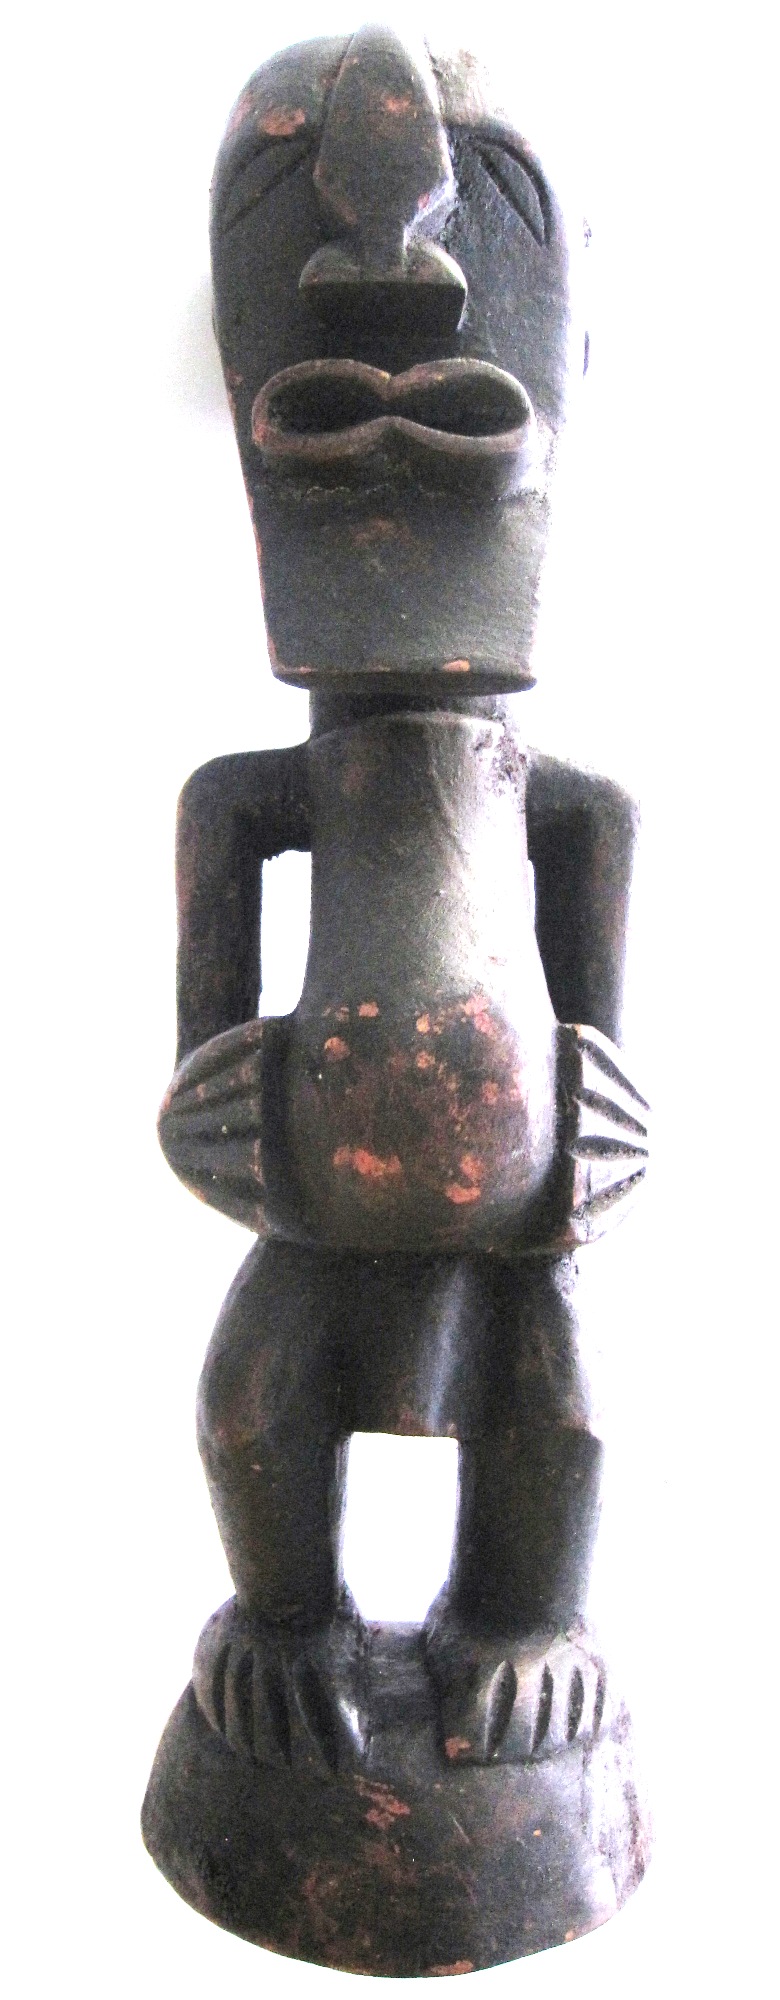 Handcrafted Wooden Tokoloshe figure - Zulu mythology evil spirit